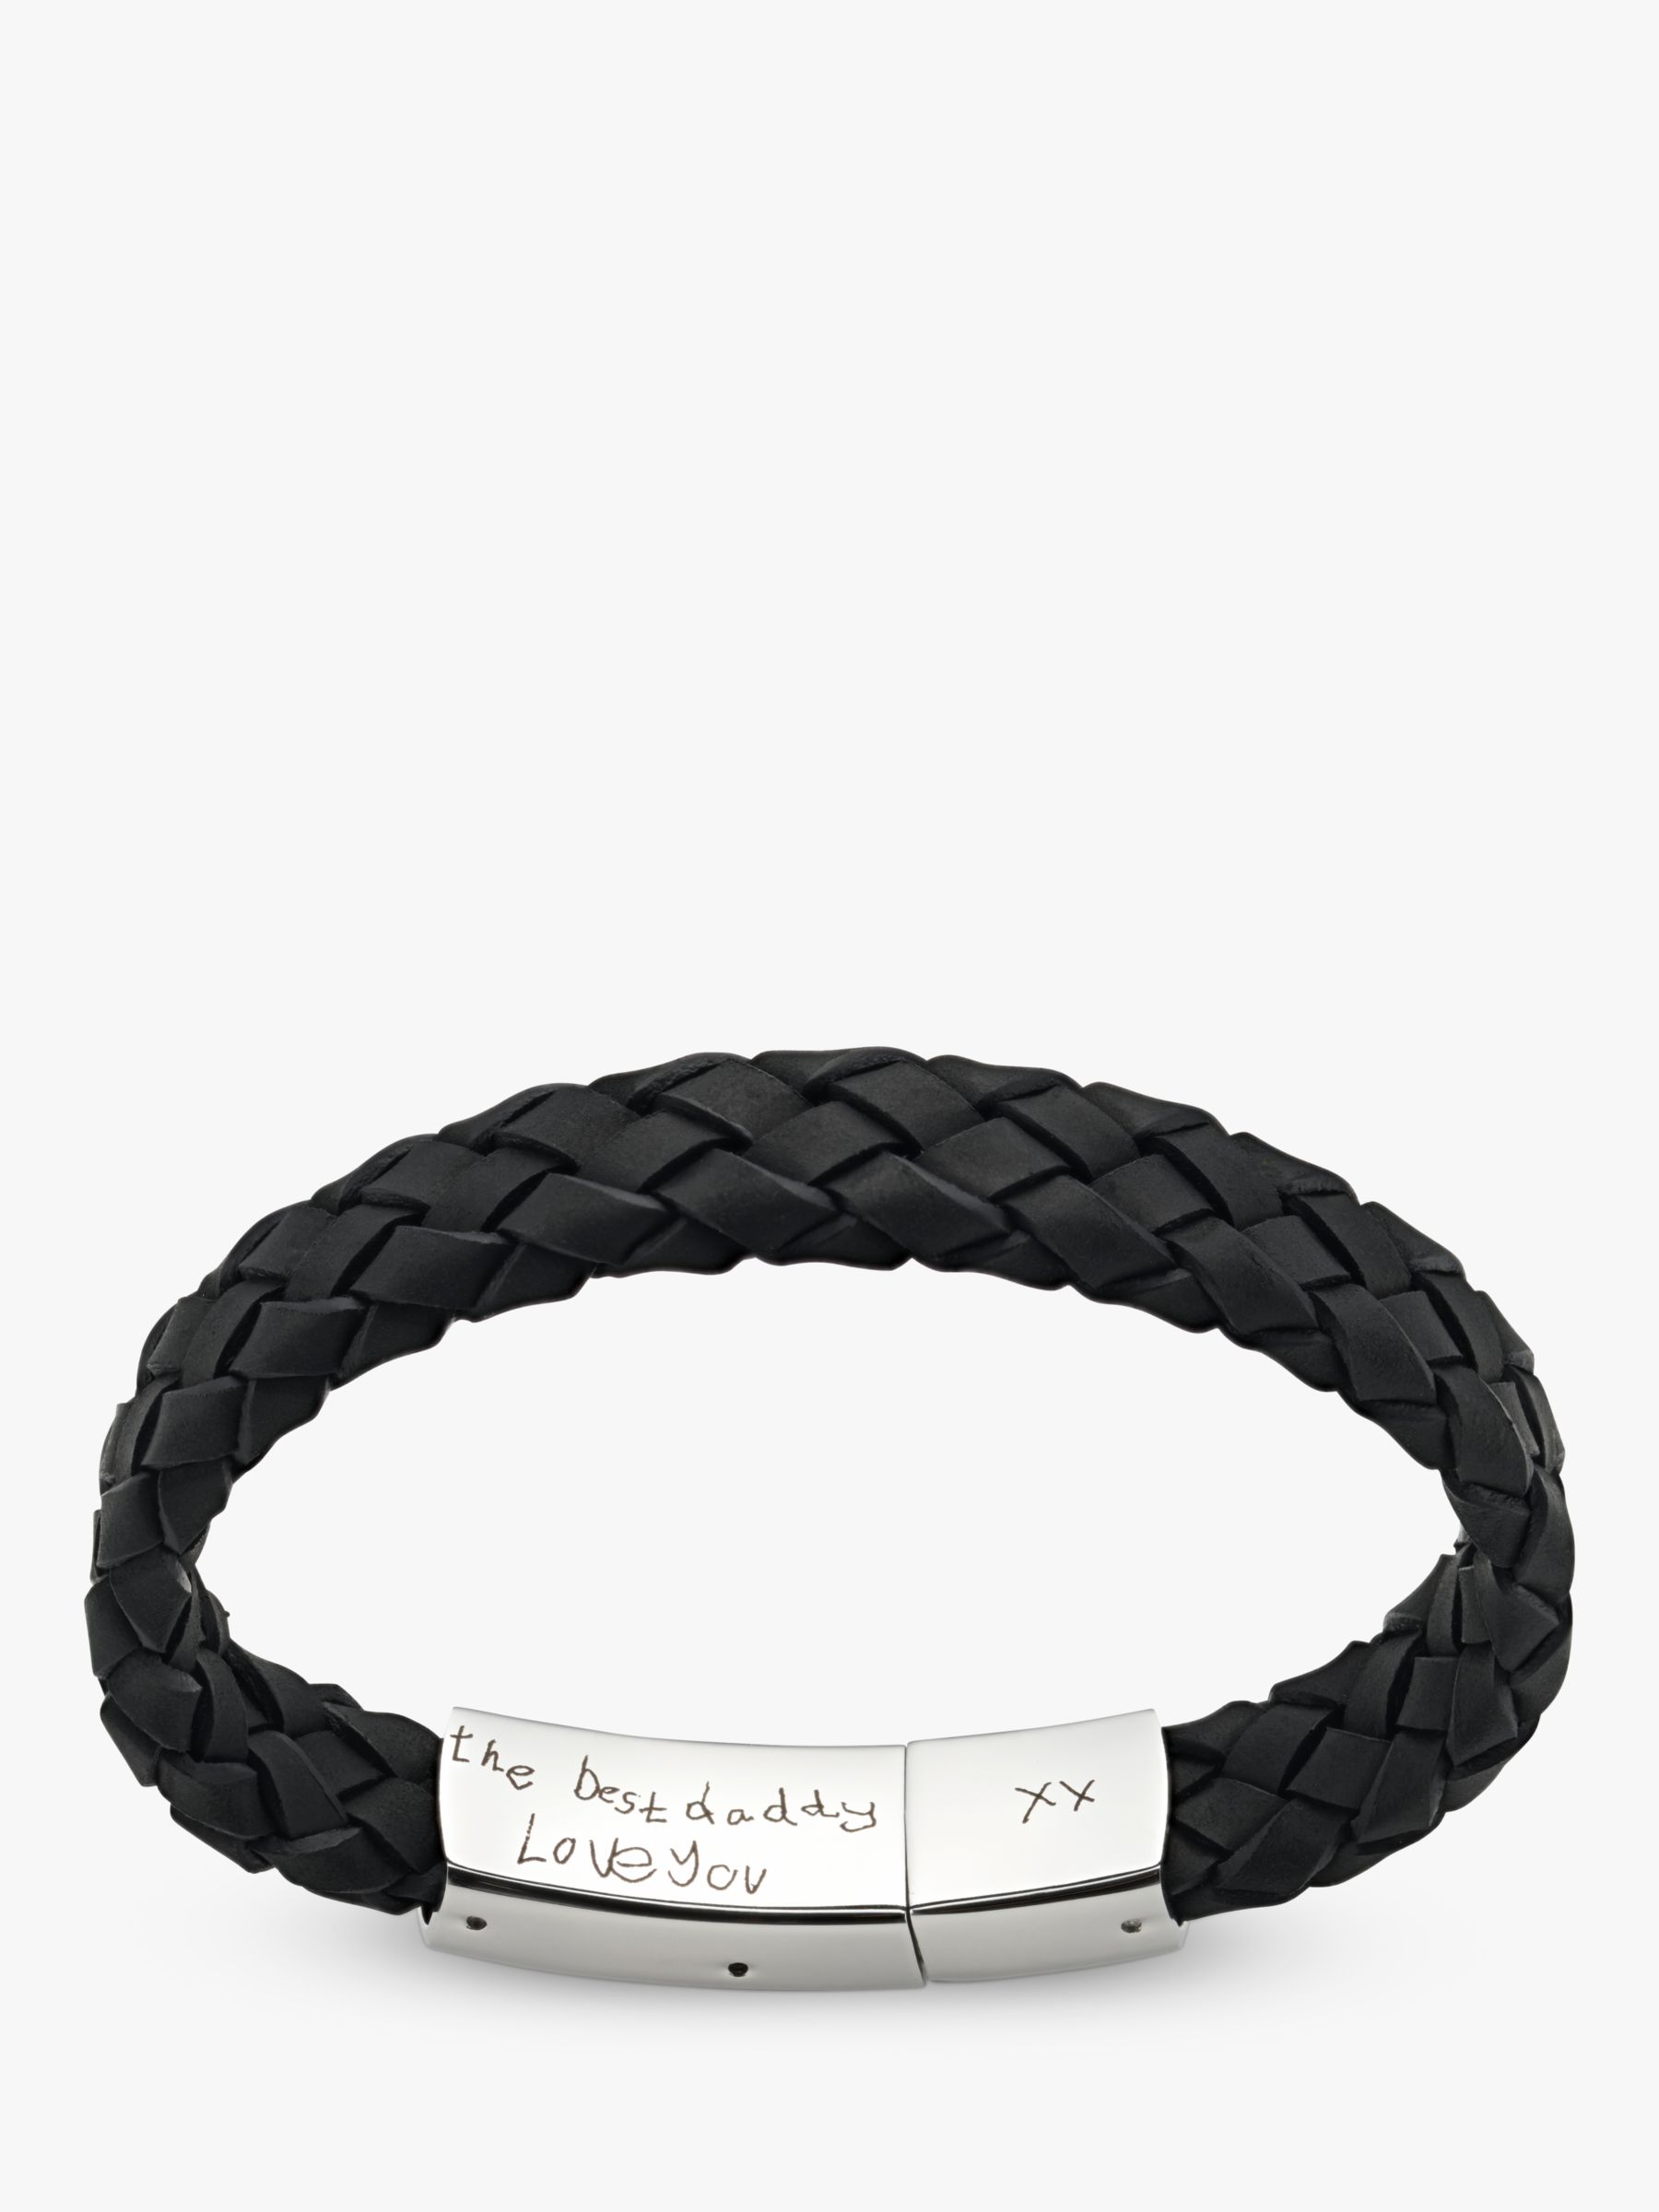 Personalised Men's Bracelets, Available Online